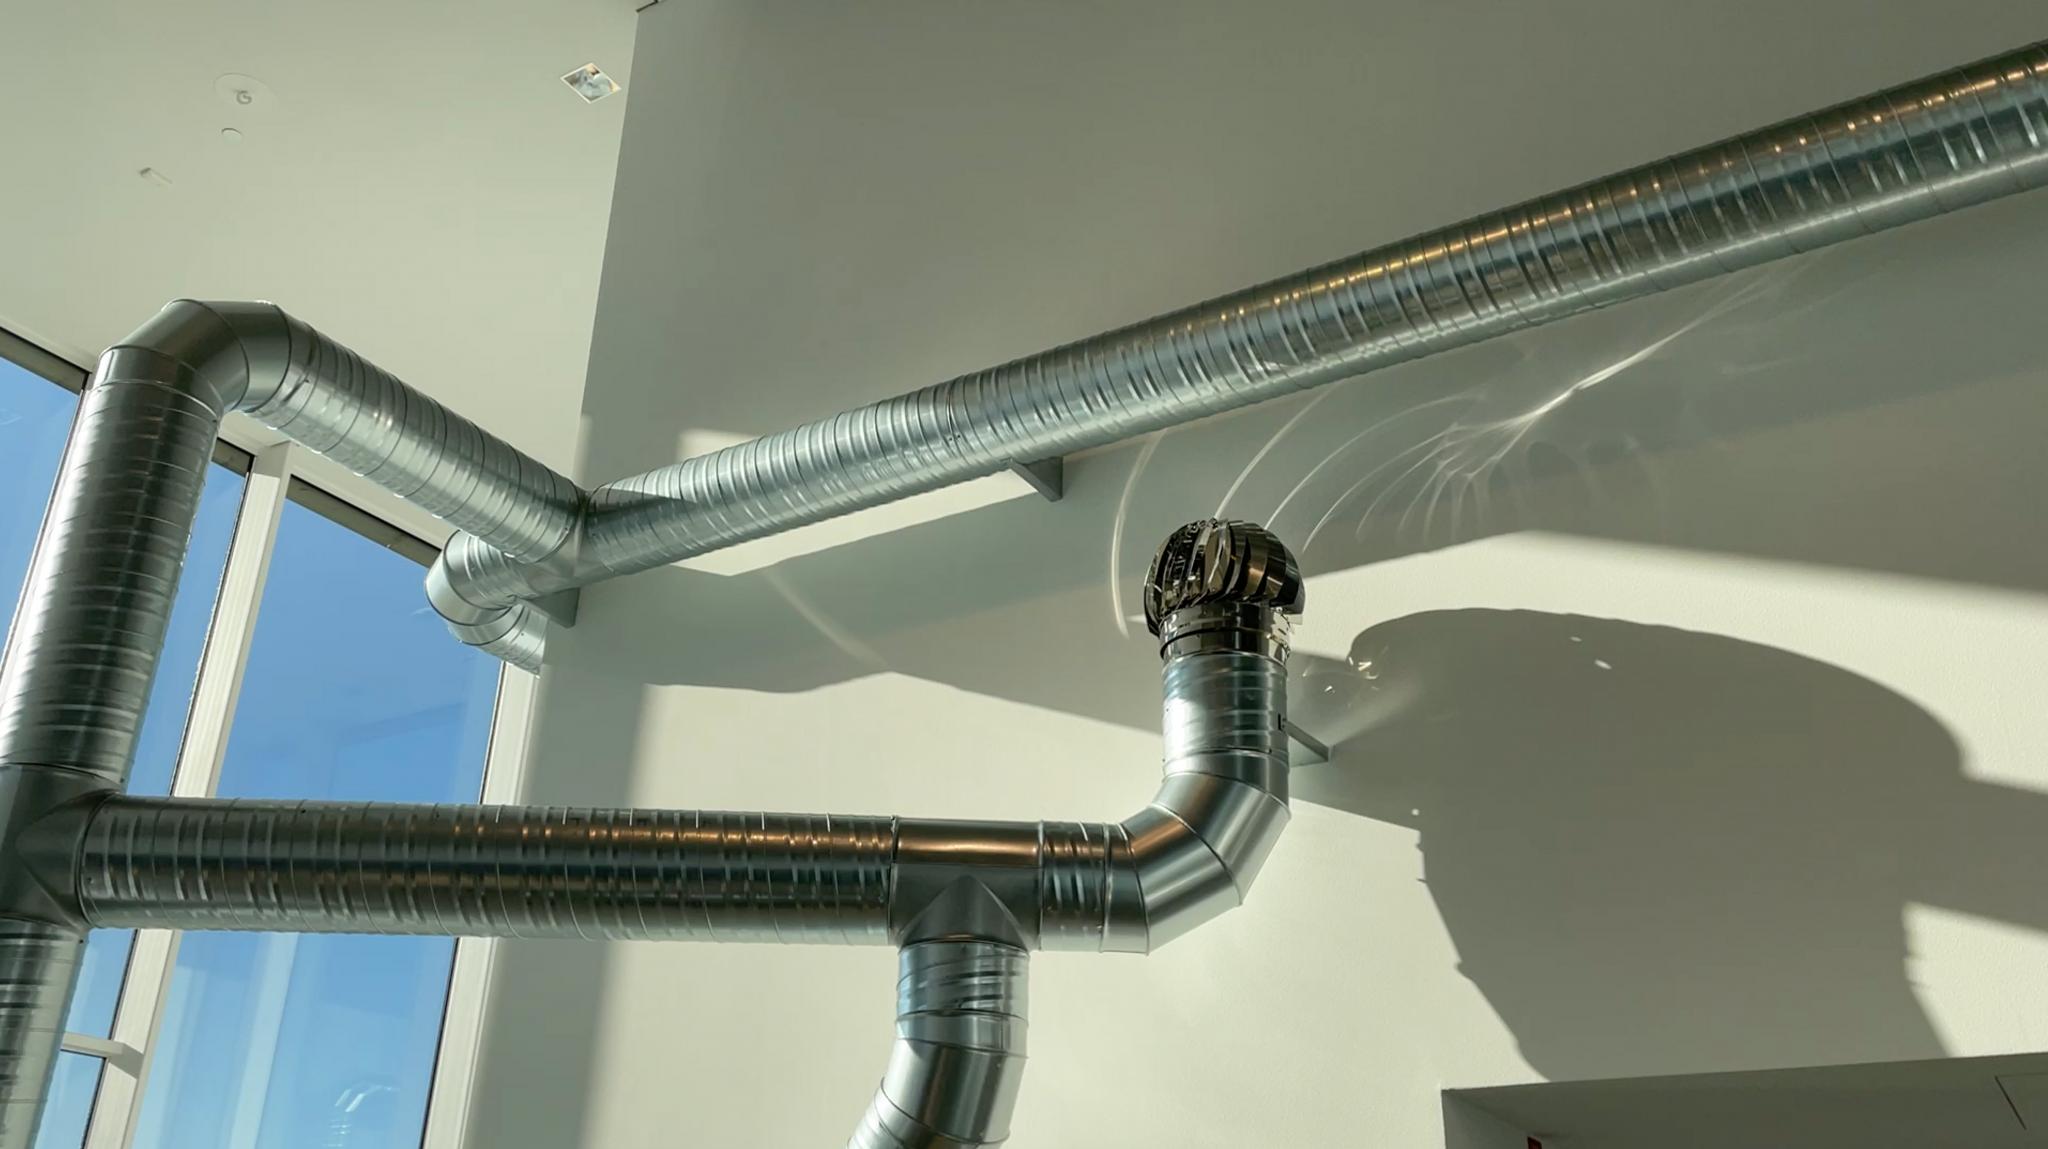 Nancy Holt's Ventilation System with a spinning turbine at Bildmuseet